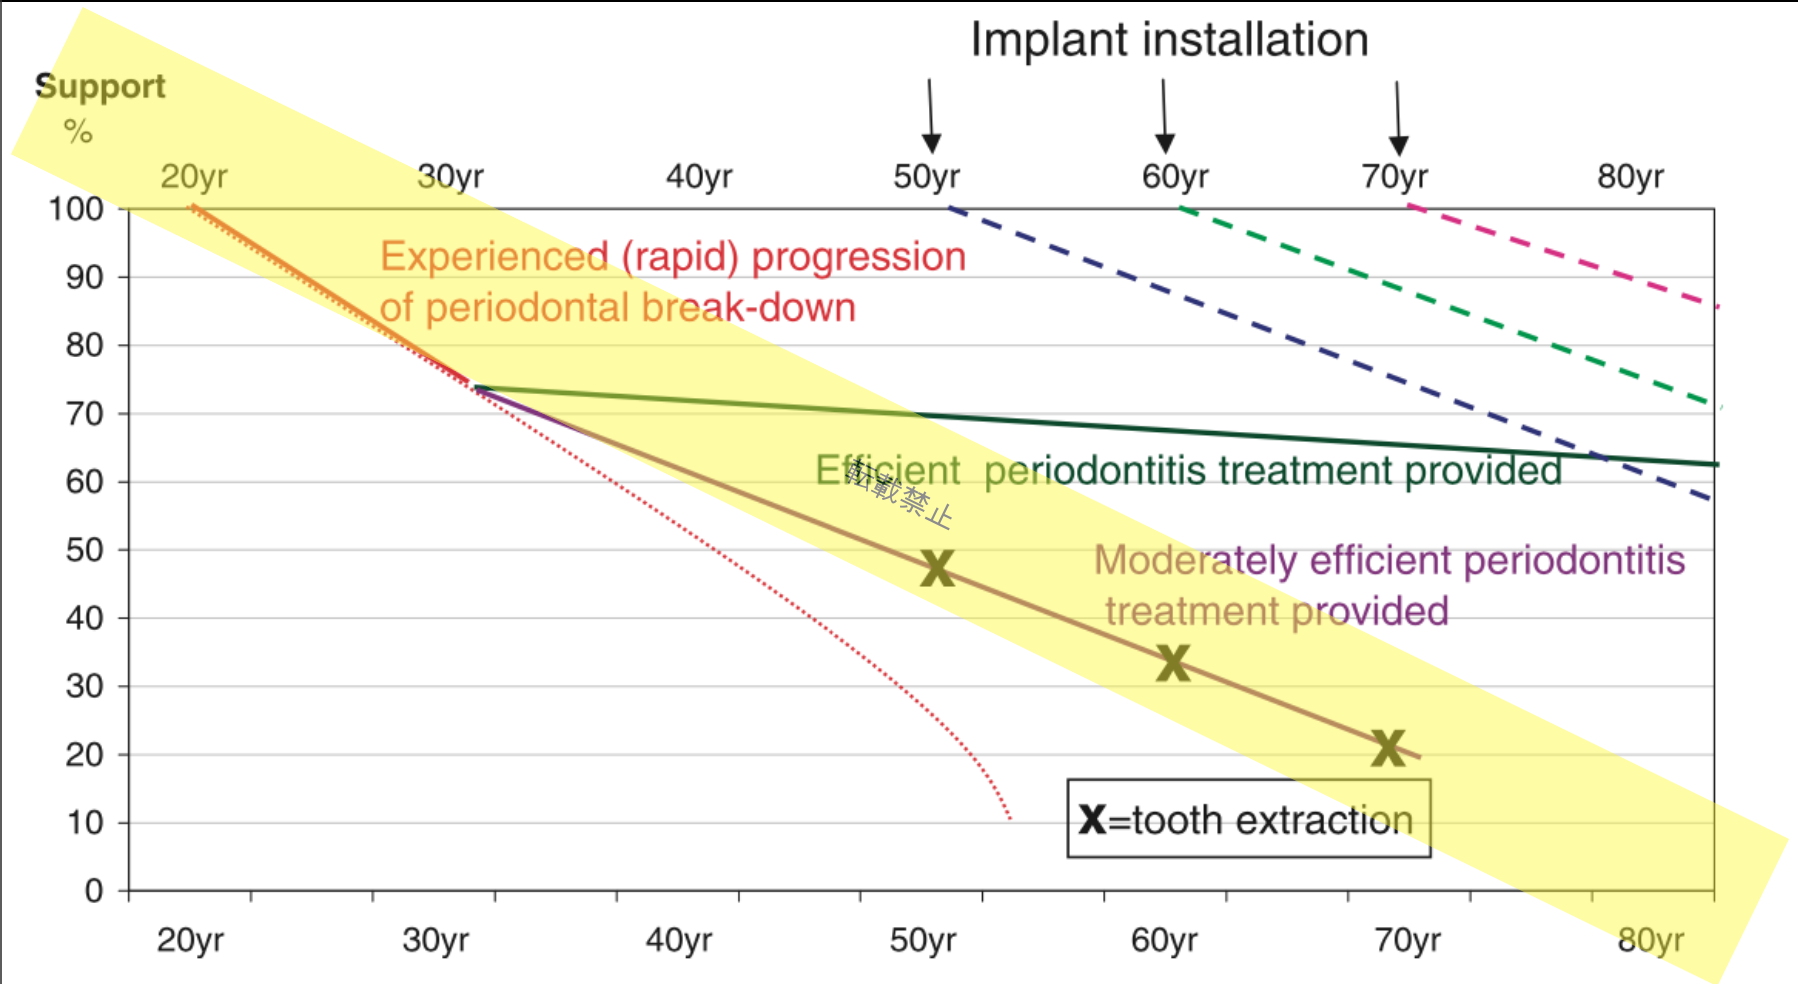 implant-installation-2